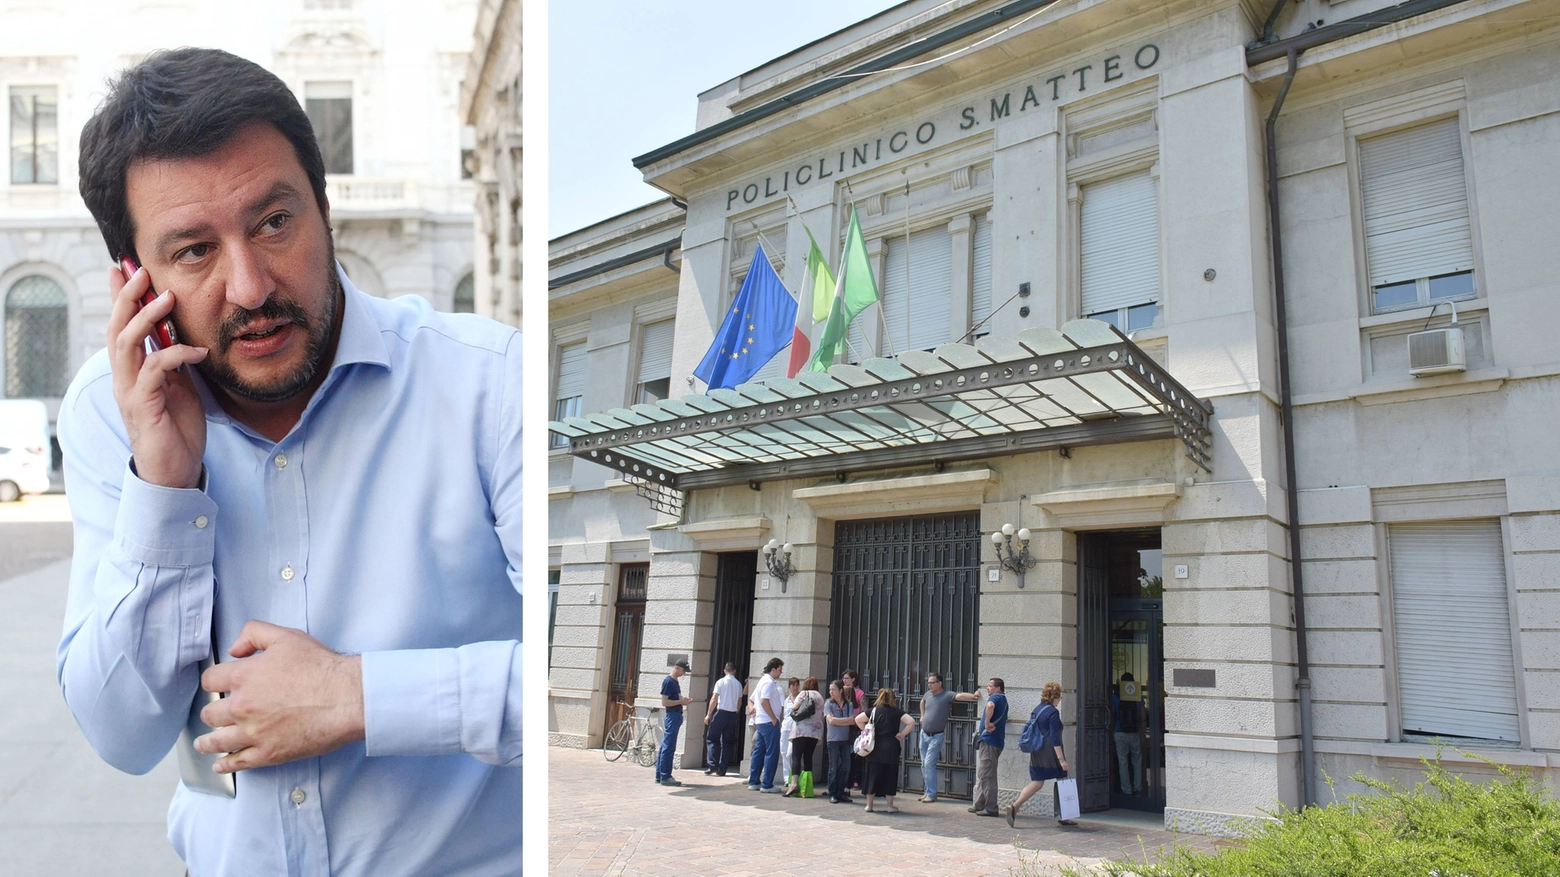 Matteo Salvini e il Policlinico San Matteo